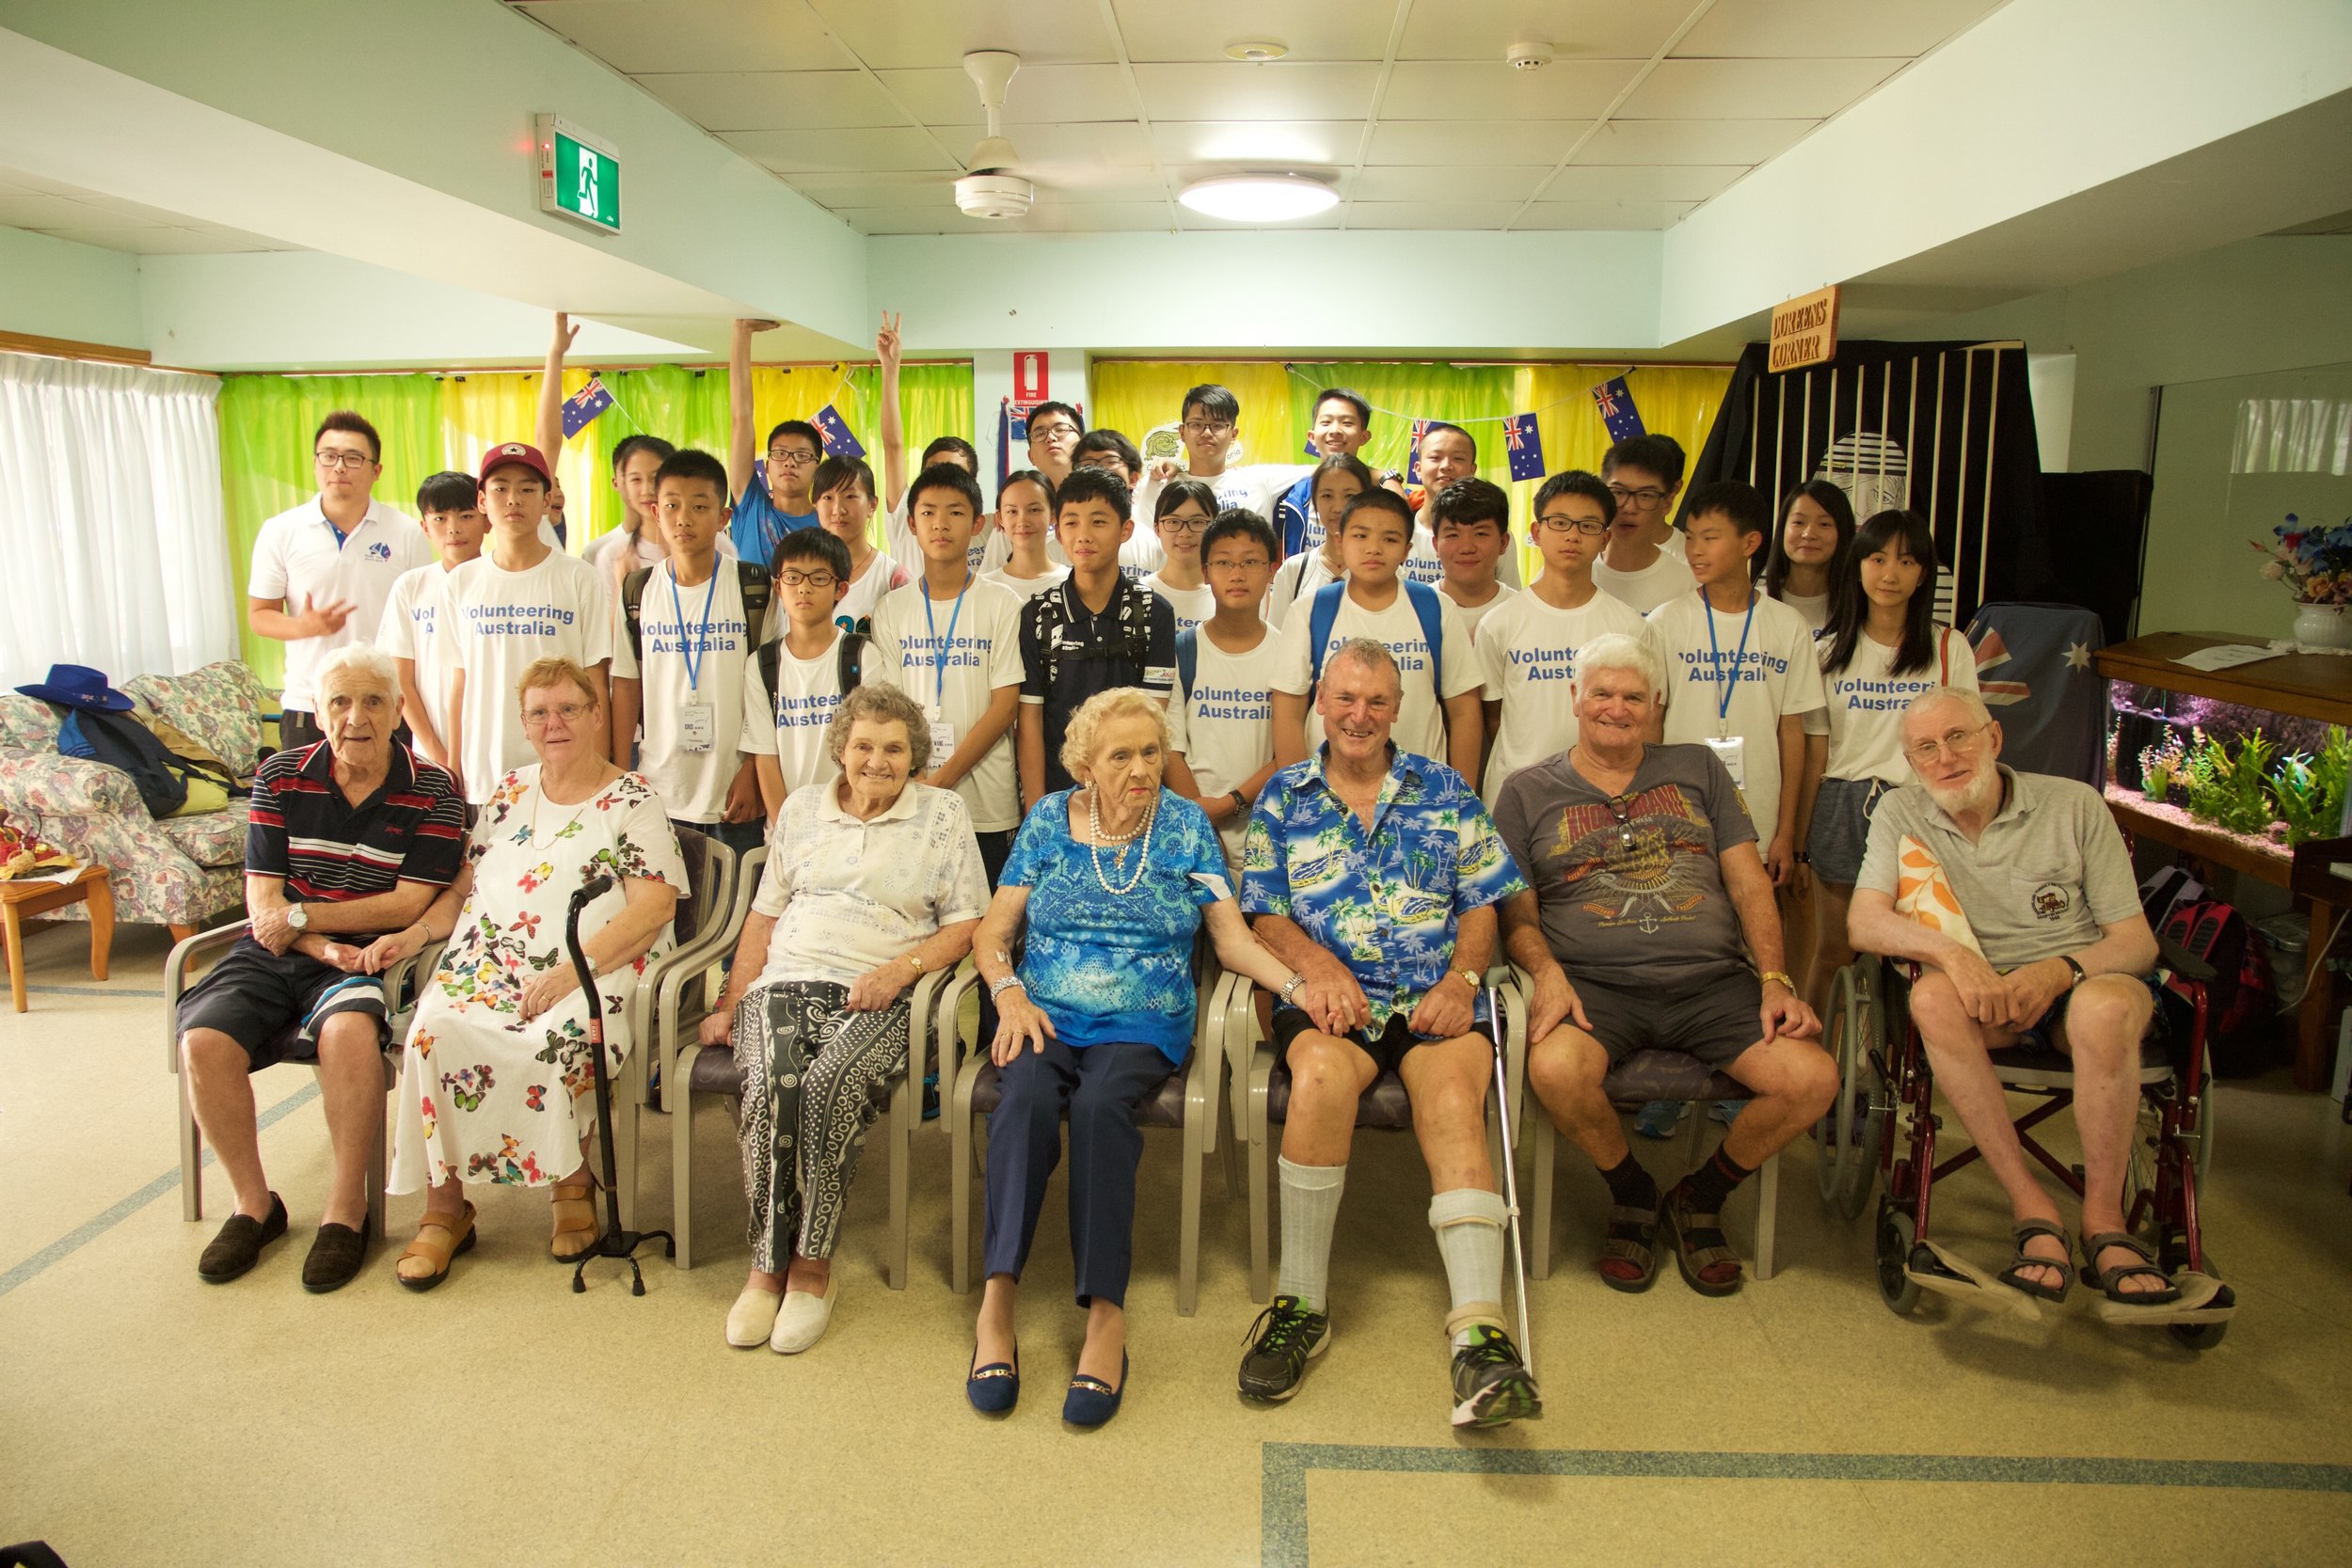 Volunteering activities in Aged Care Center